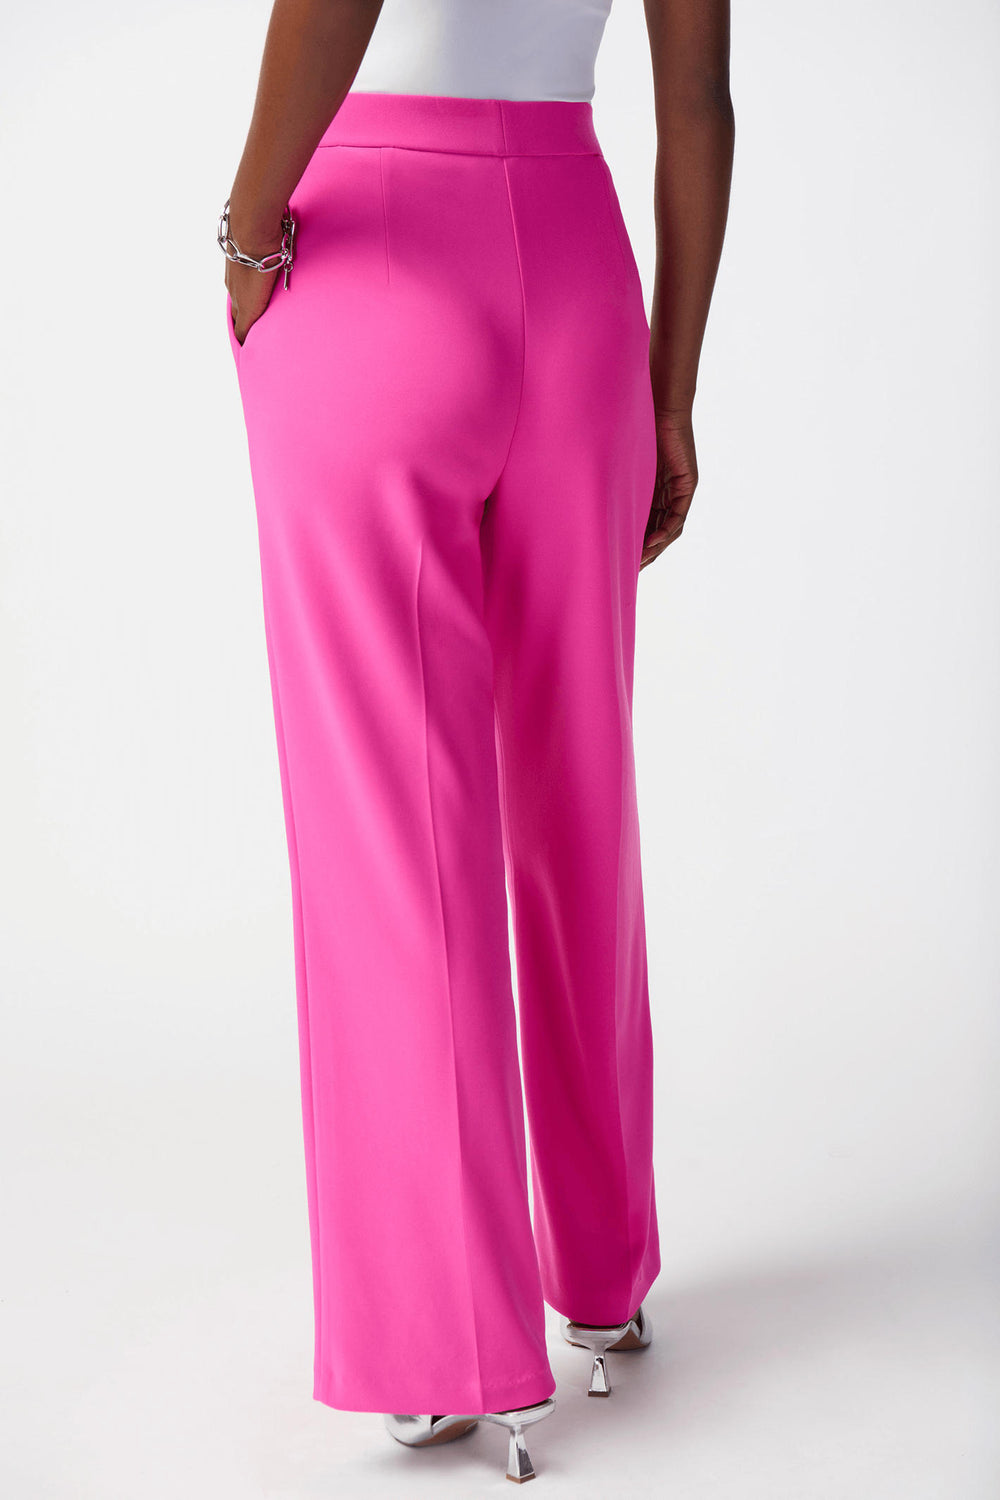 Joseph Ribkoff 241095 Ultra Pink Wide Leg Pull-On Trousers - Olivia Grace Fashion